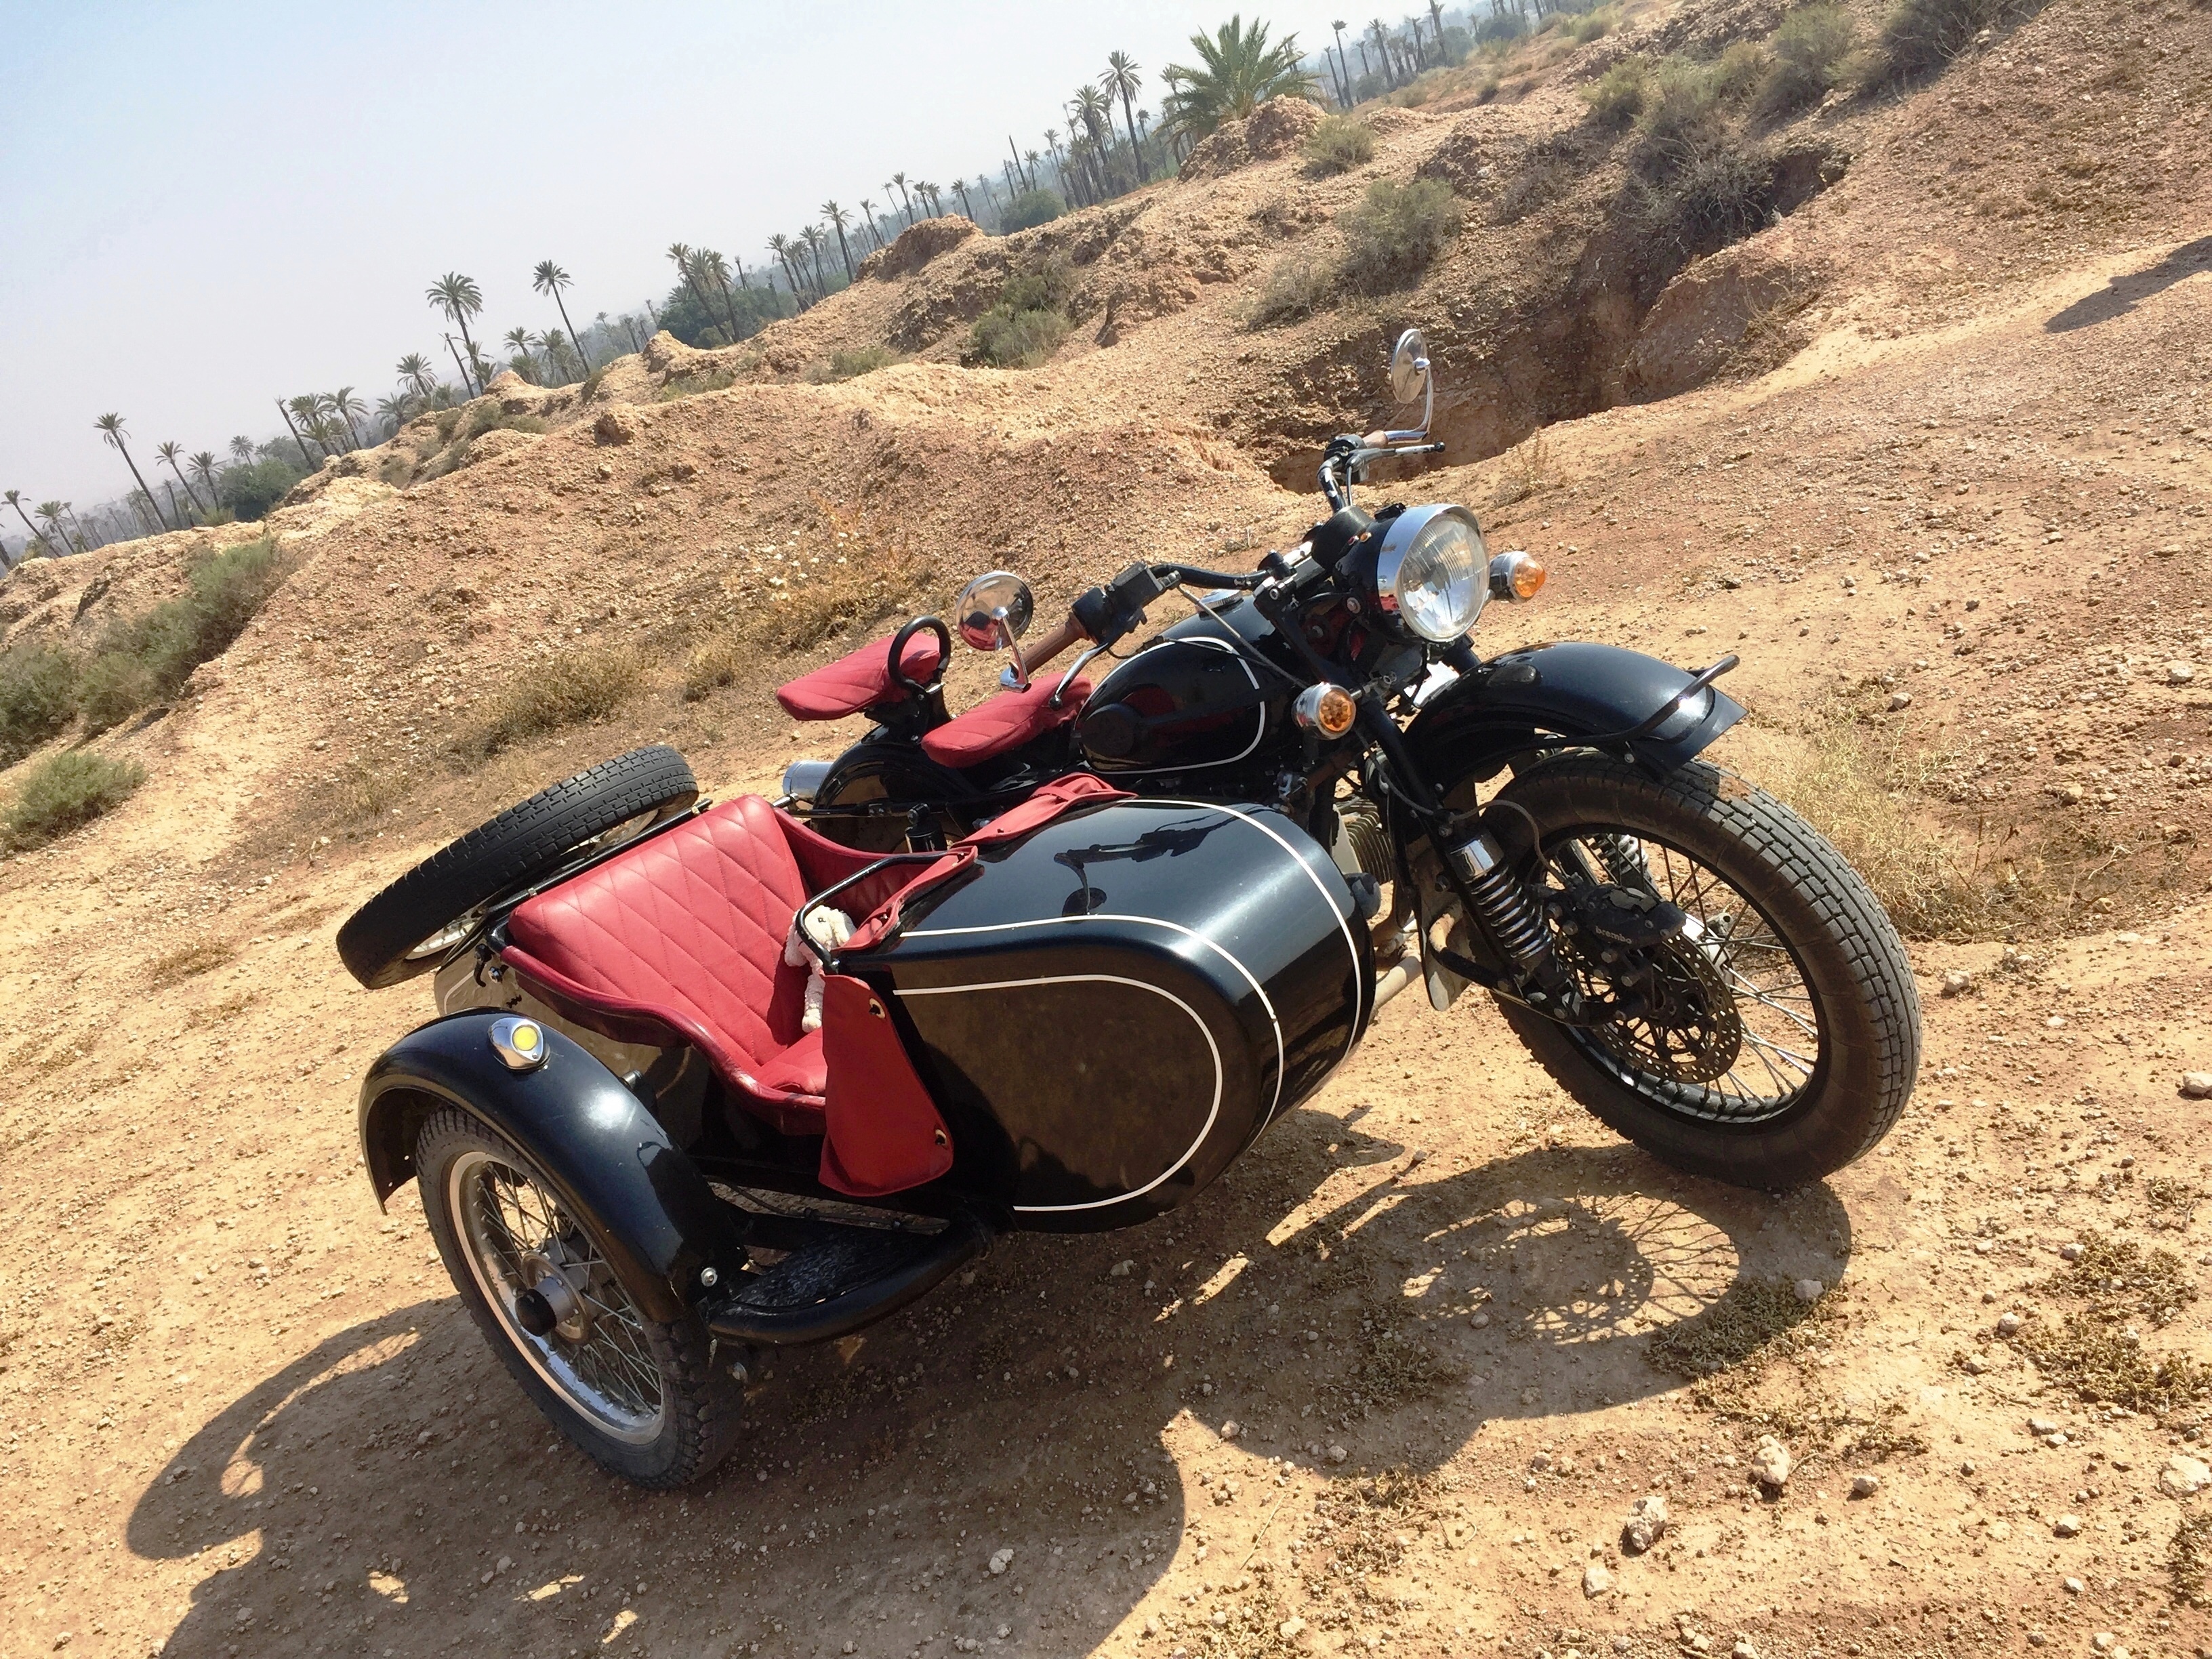 Morocco sidecar ride tour to explore the desert of Marrakech Agafay